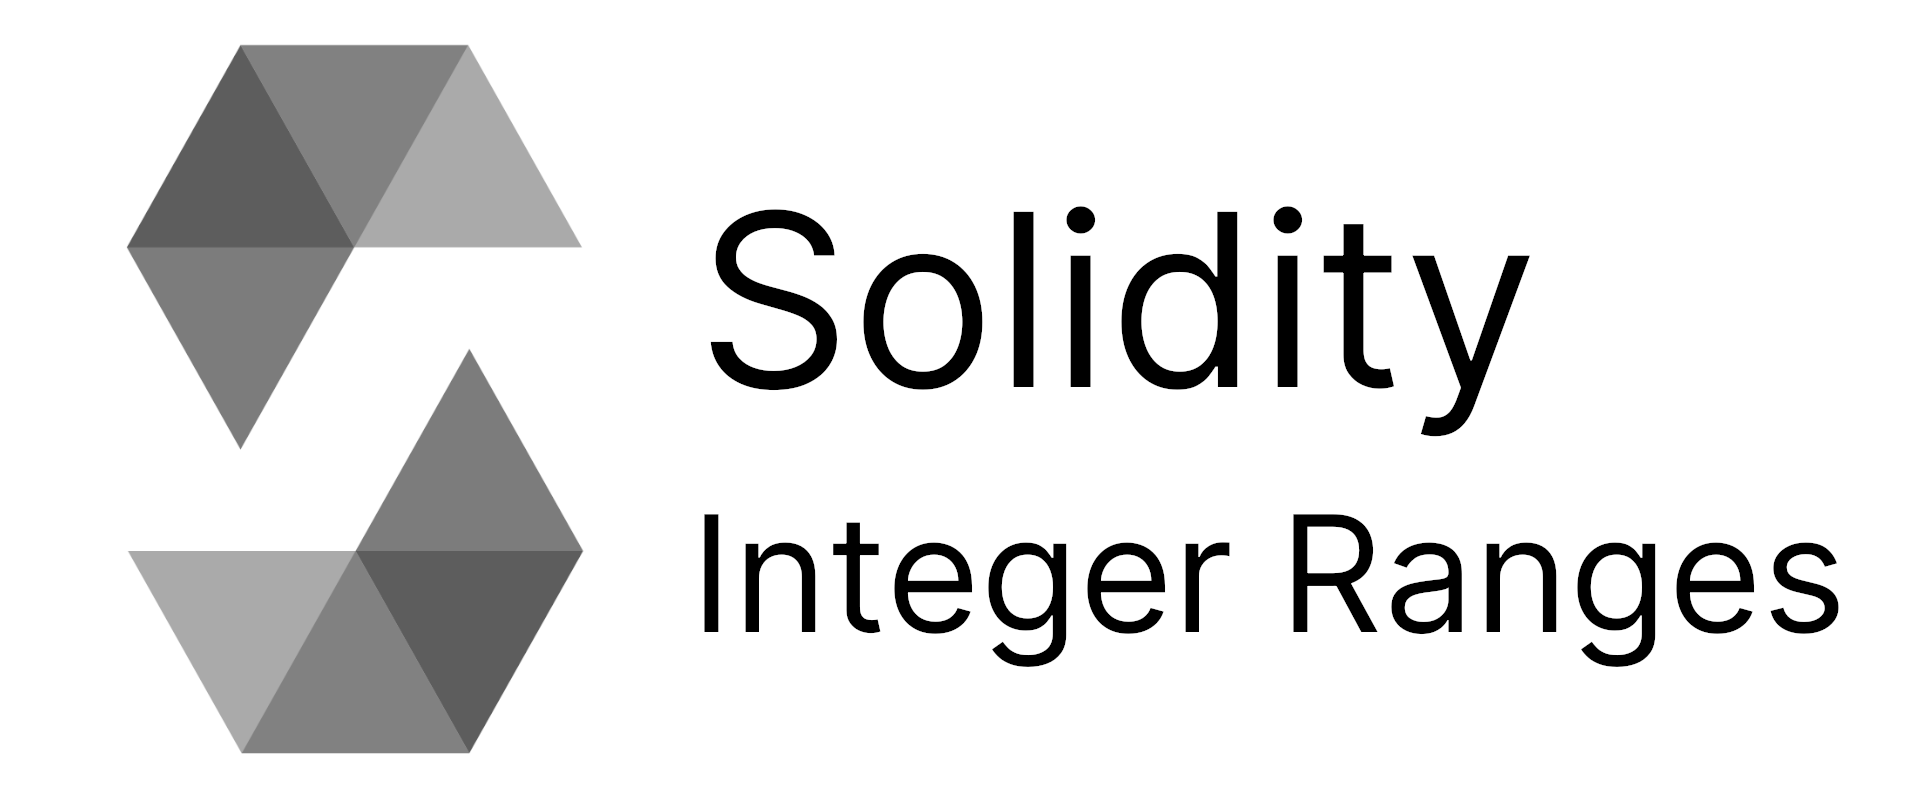 Solidity Integer Ranges